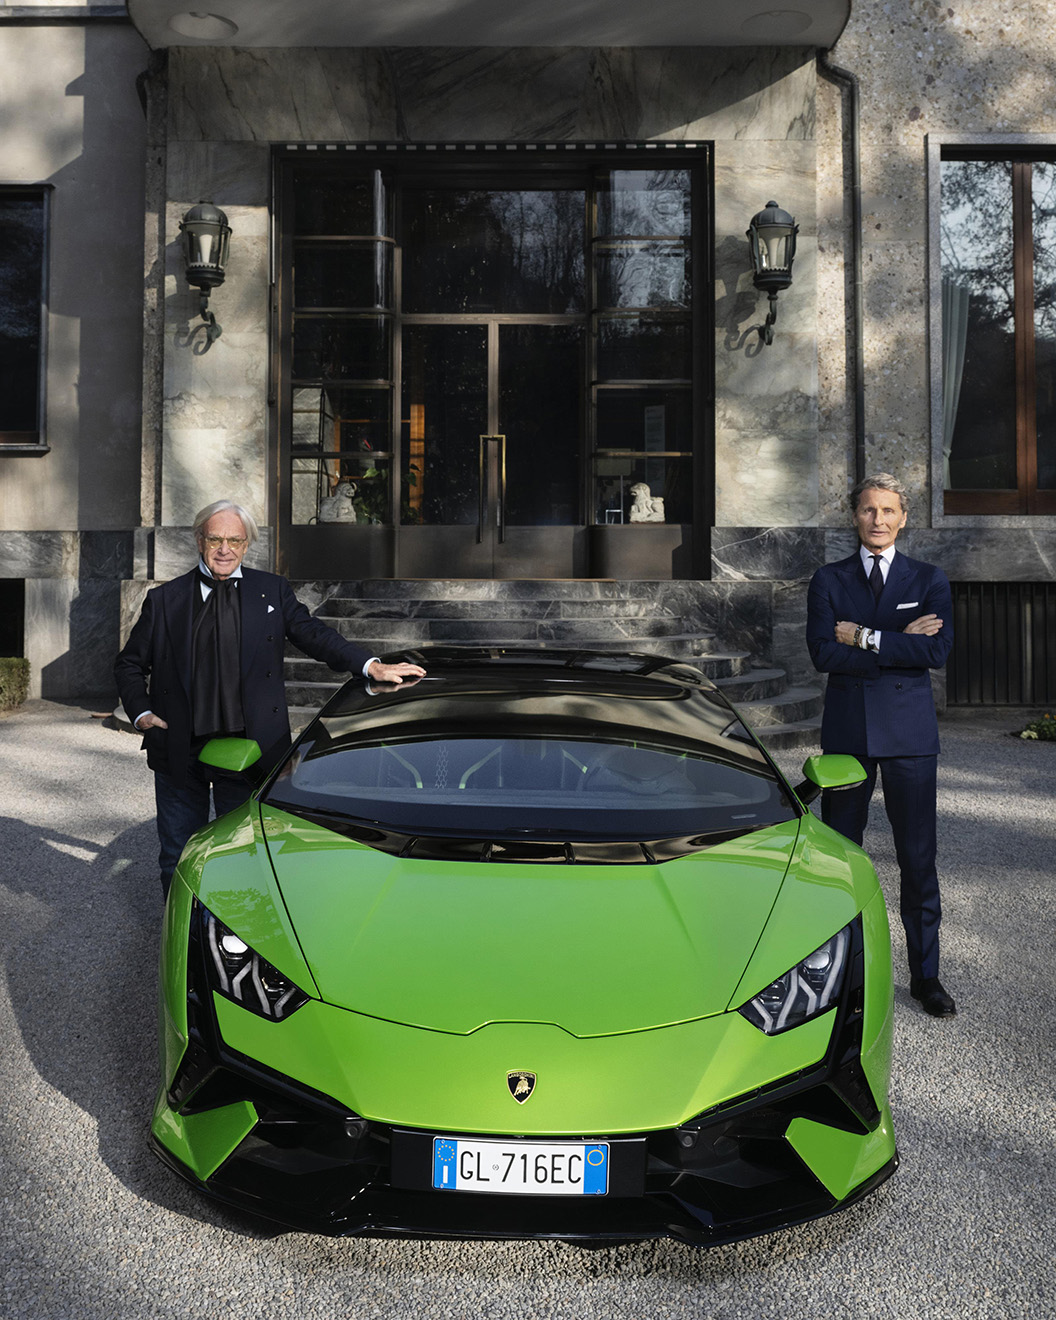 Lamborghini and Tod's partner to celebrate Italian craftsmanship and innovation
